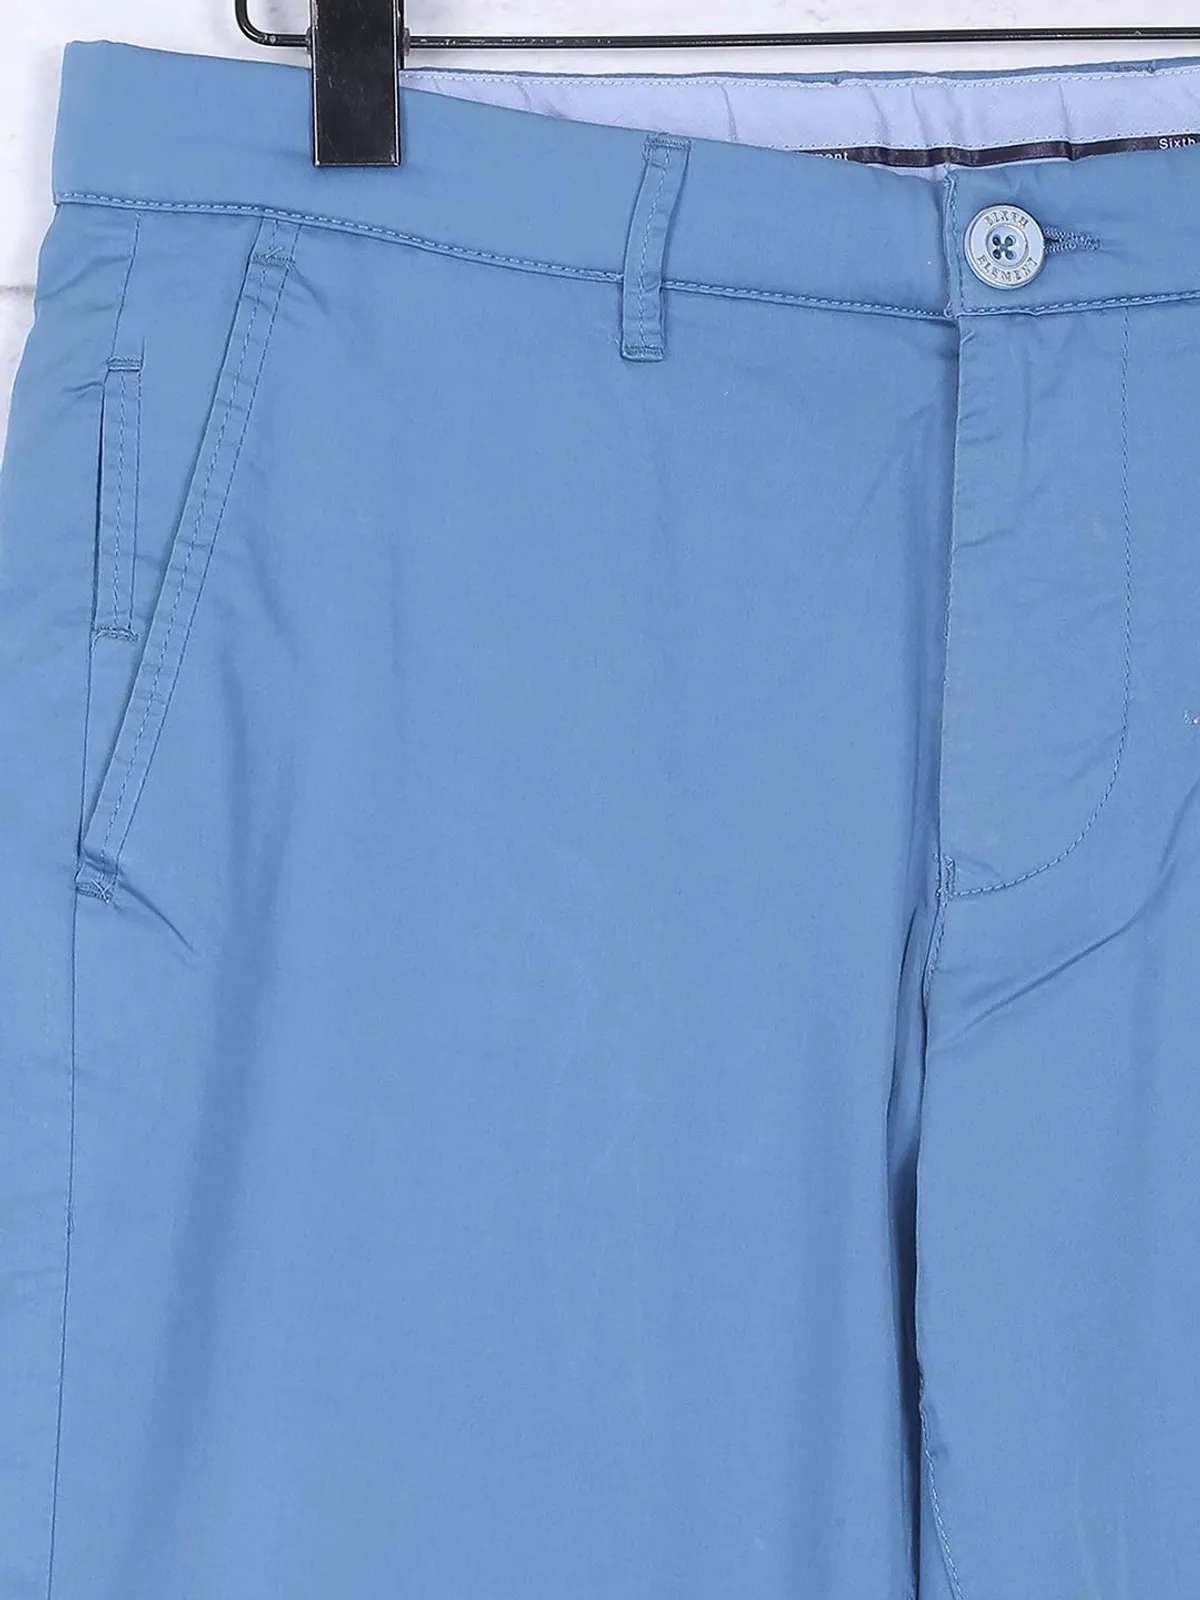 Sixth Element cotton fabric sky blue trouser